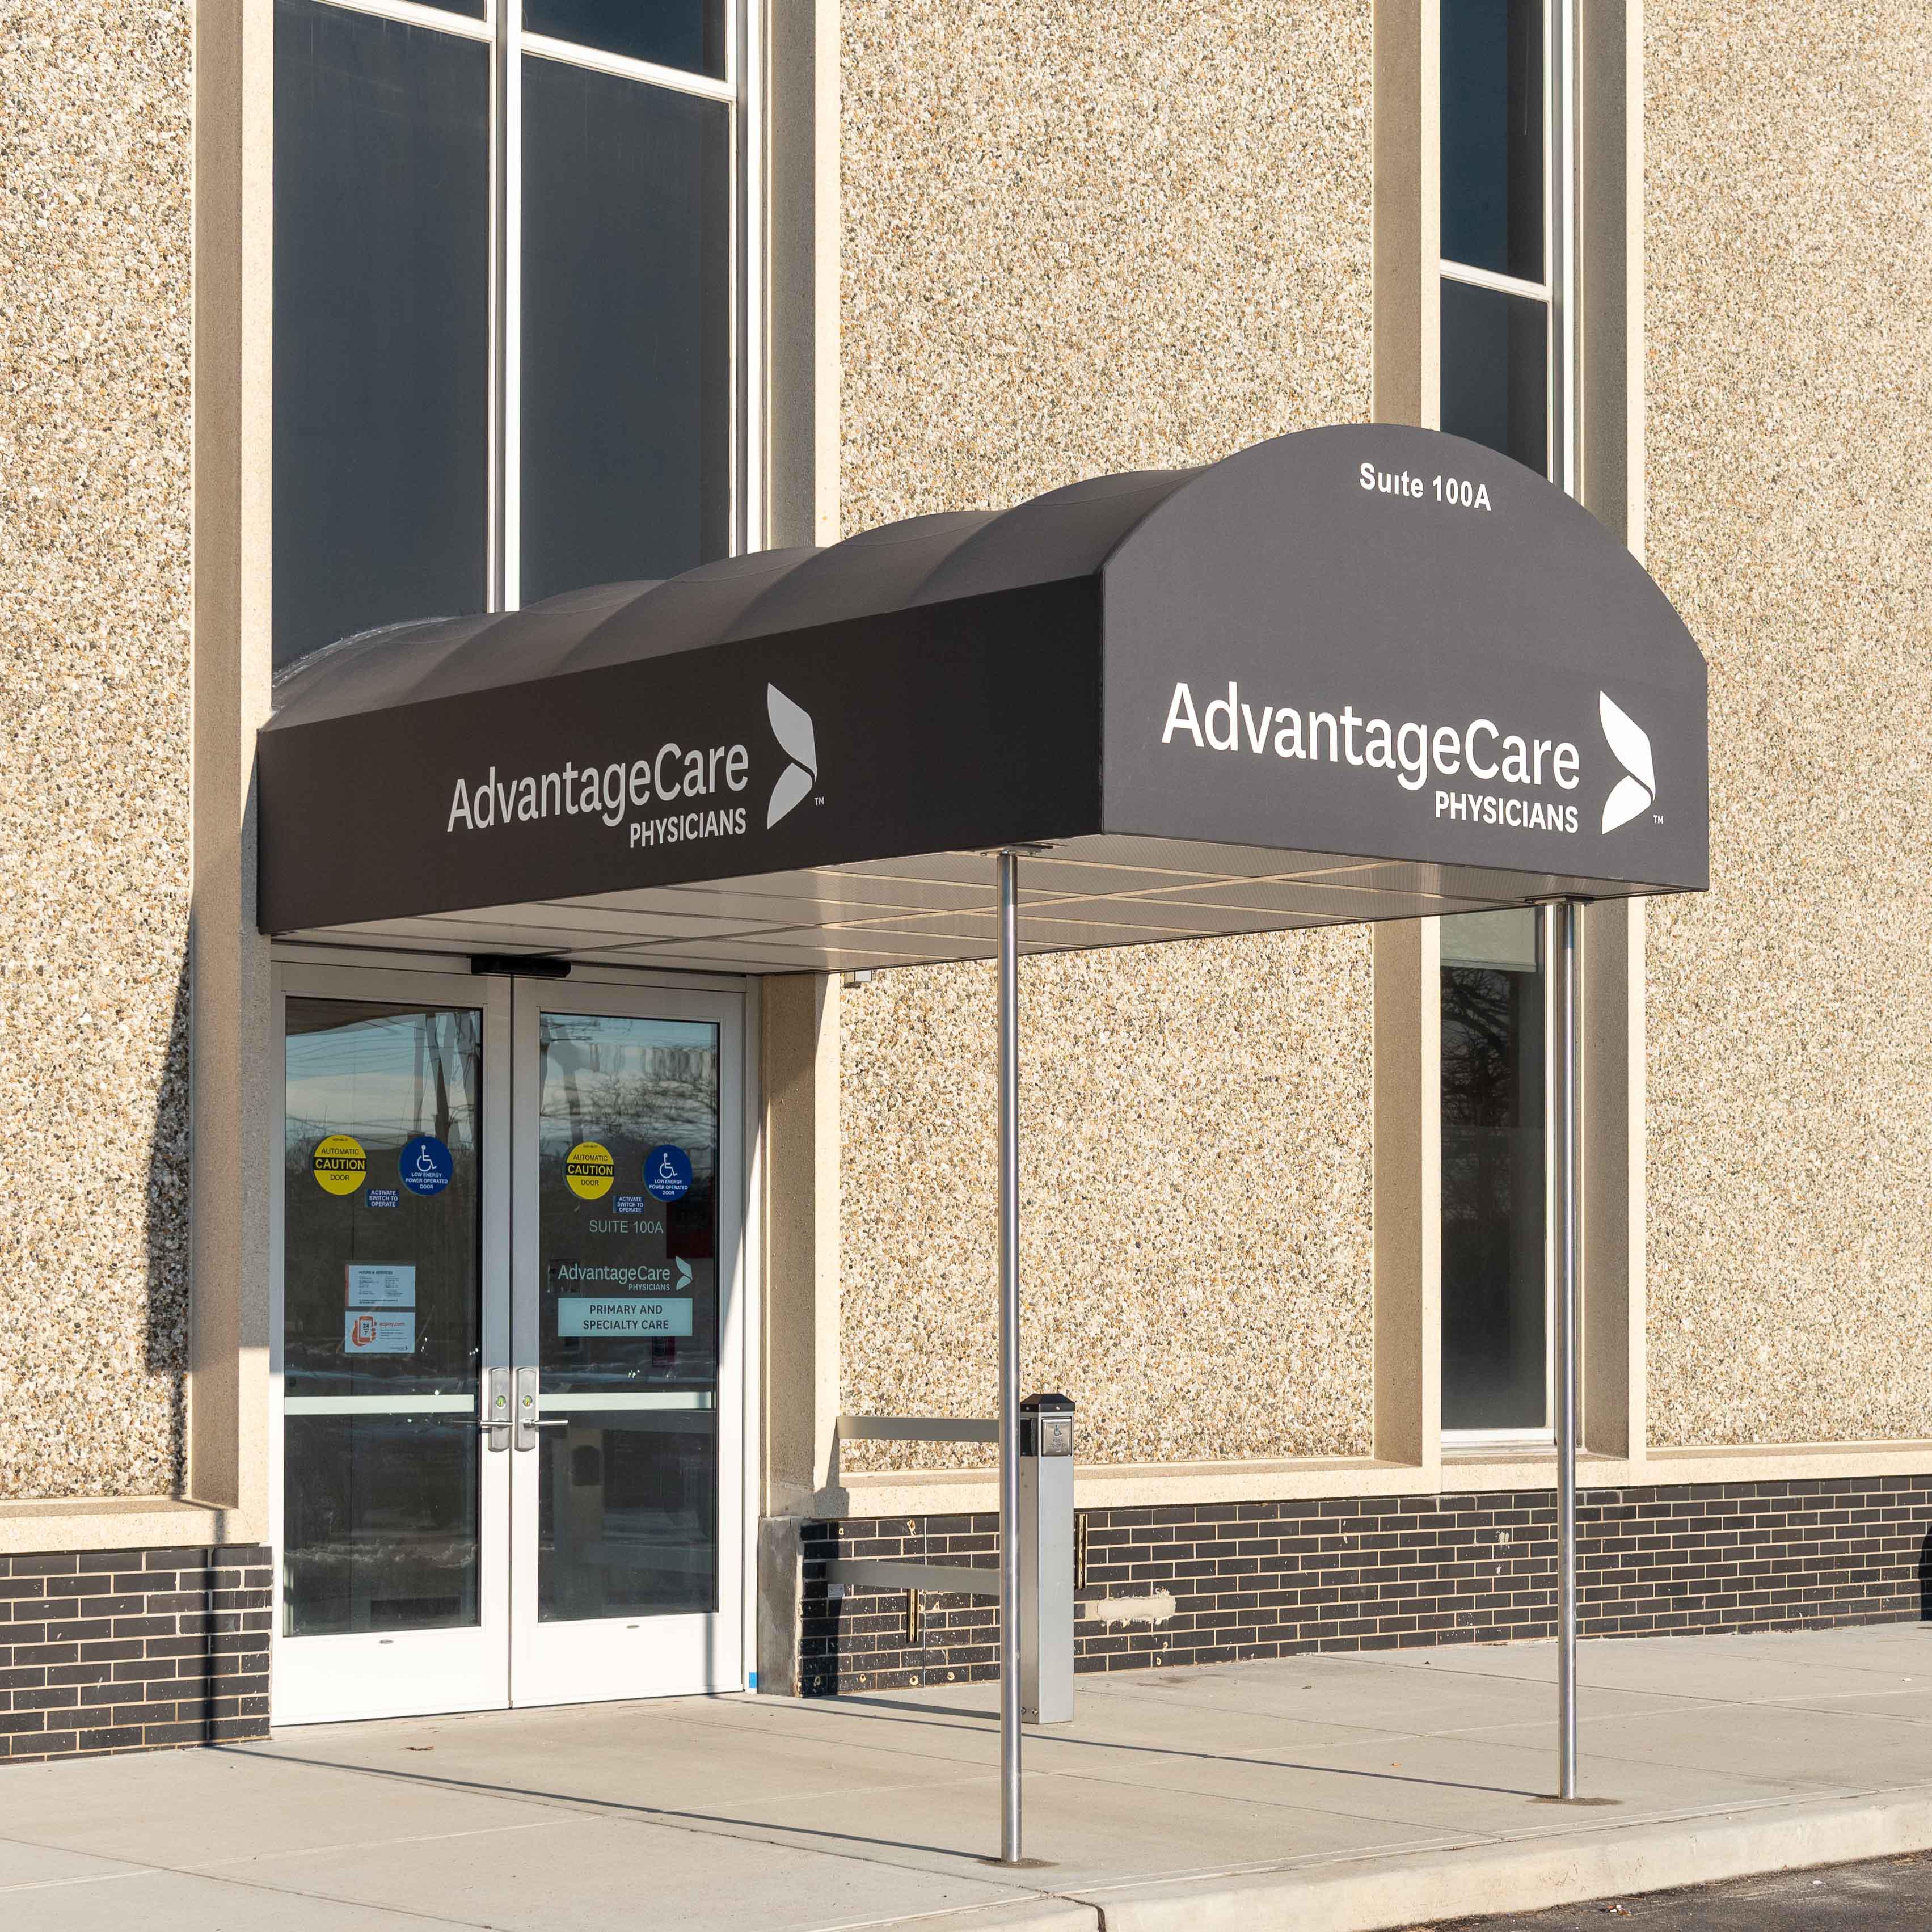 AdvantageCare Physicians - Bethpage Medical Office entrance